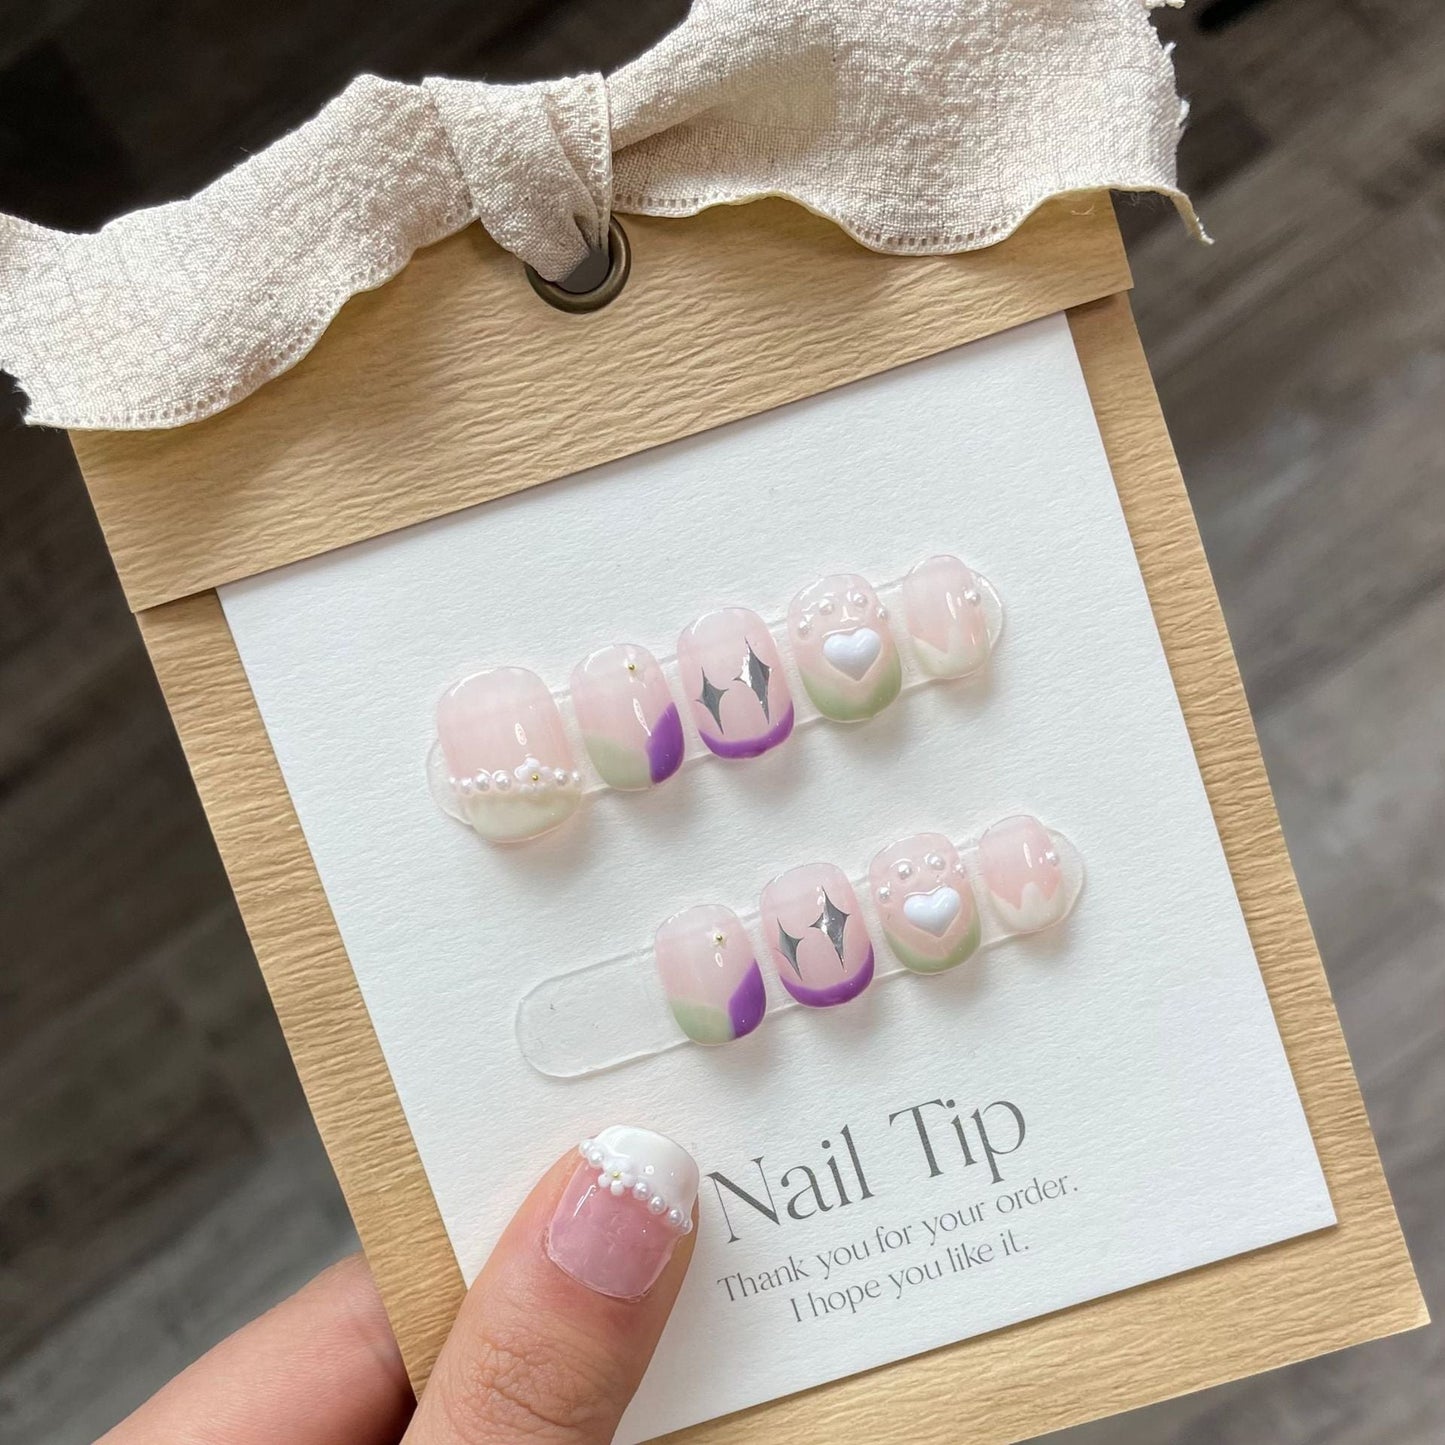 732 sweetheart style press on nails 100% handmade false nails pink